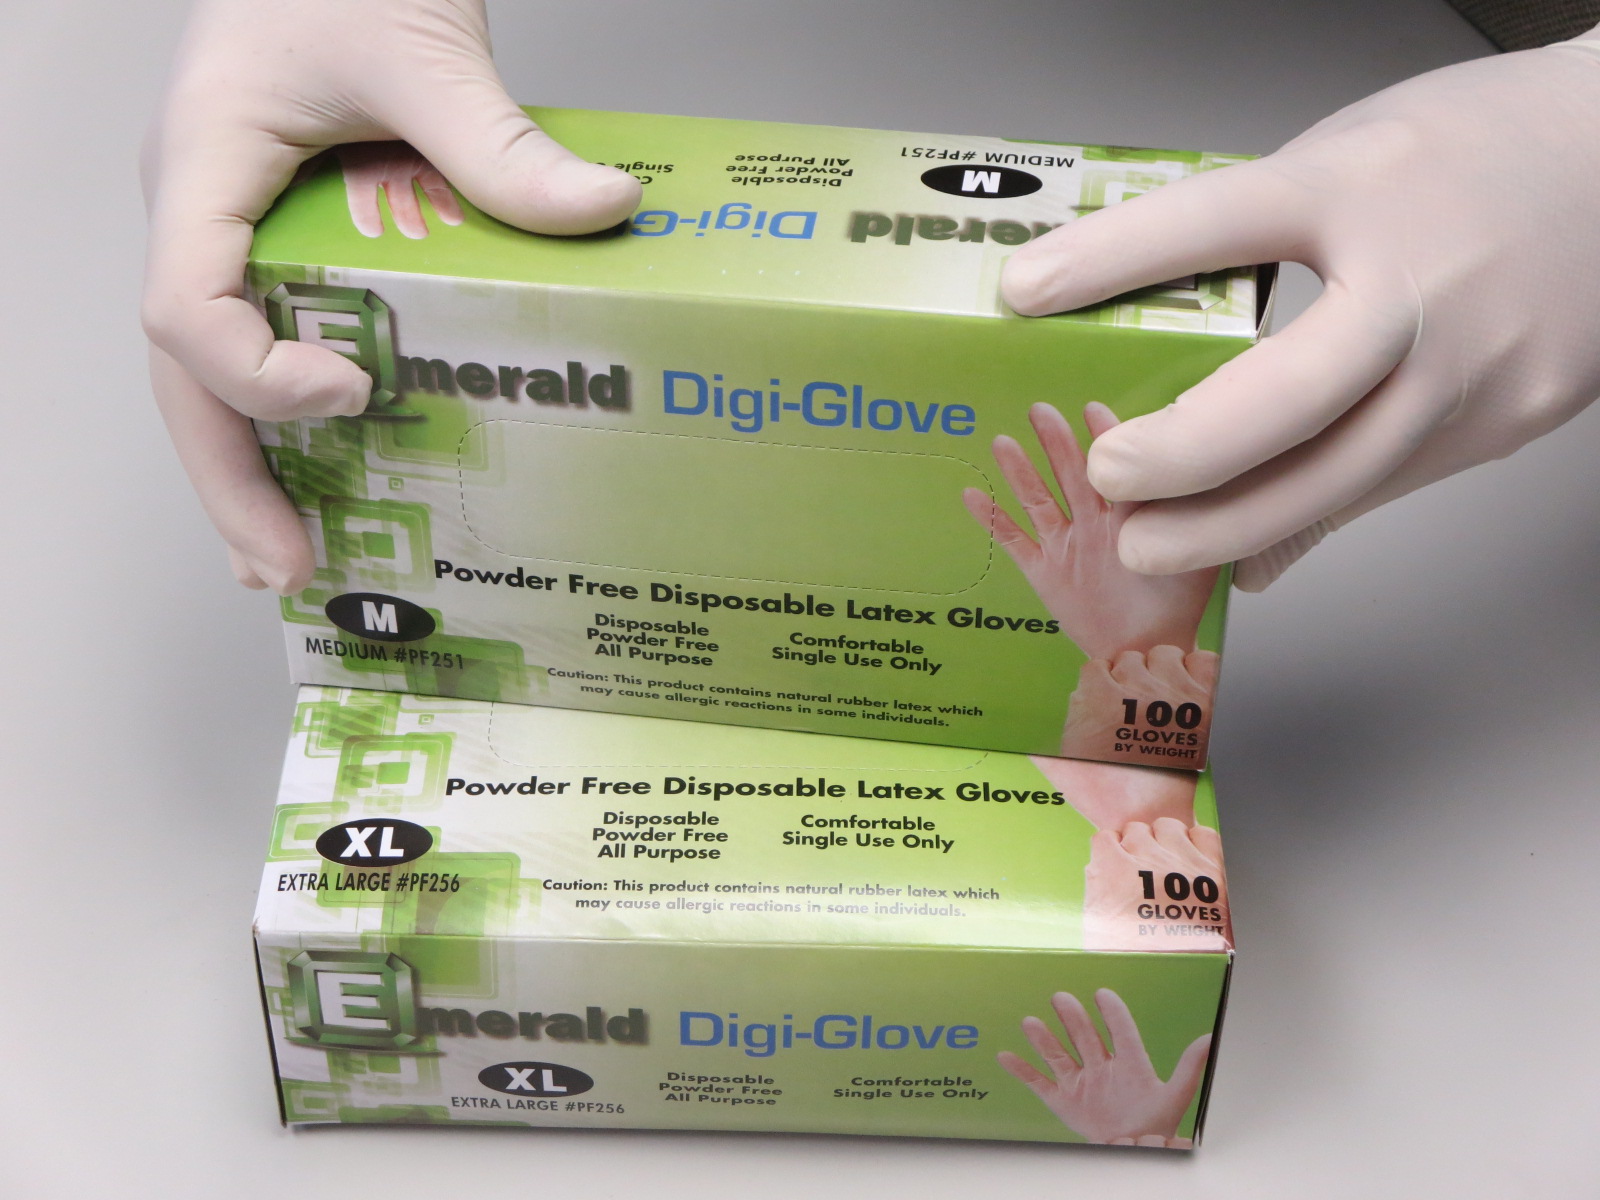 Emerald Digi-Glove 4-mil powder-free general purpose Latex Gloves